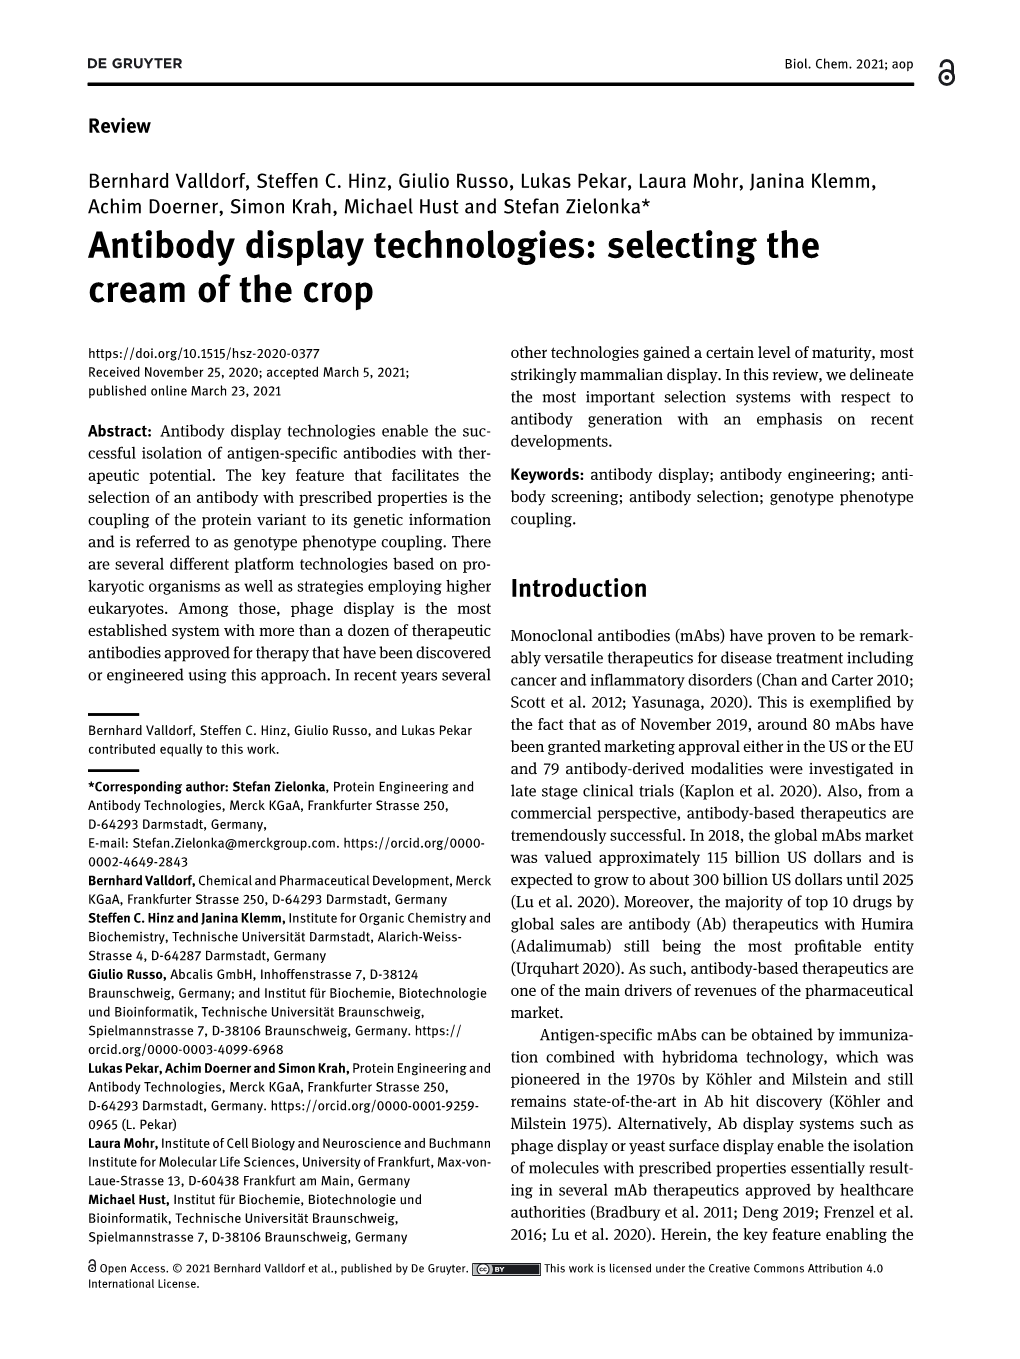 Antibody Display Technologies: Selecting the Cream of the Crop